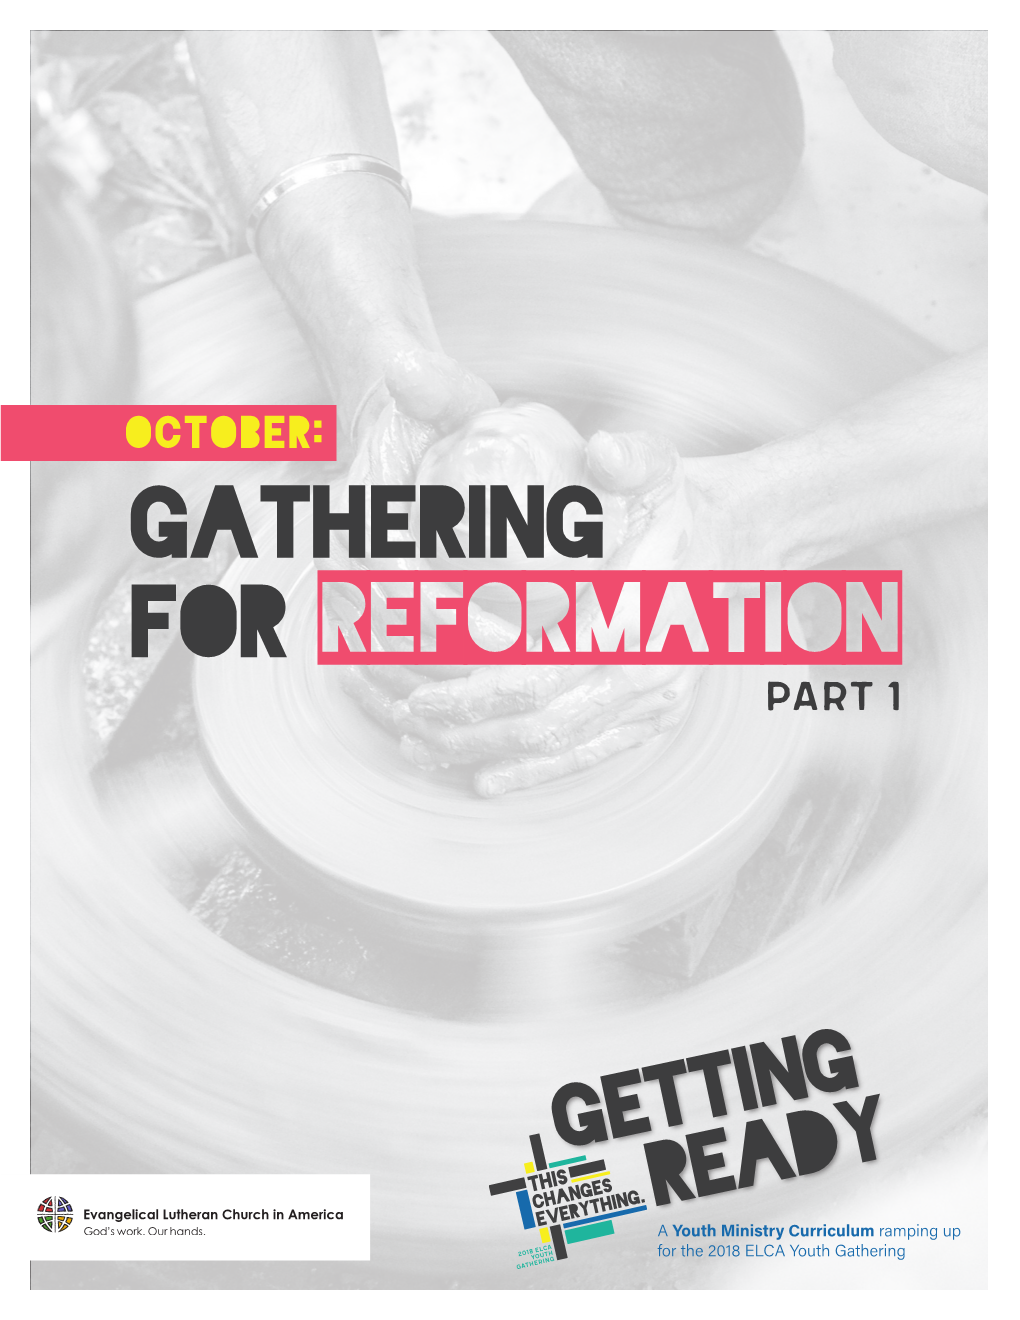 OCTOBER: Gathering for Reformation PART 1